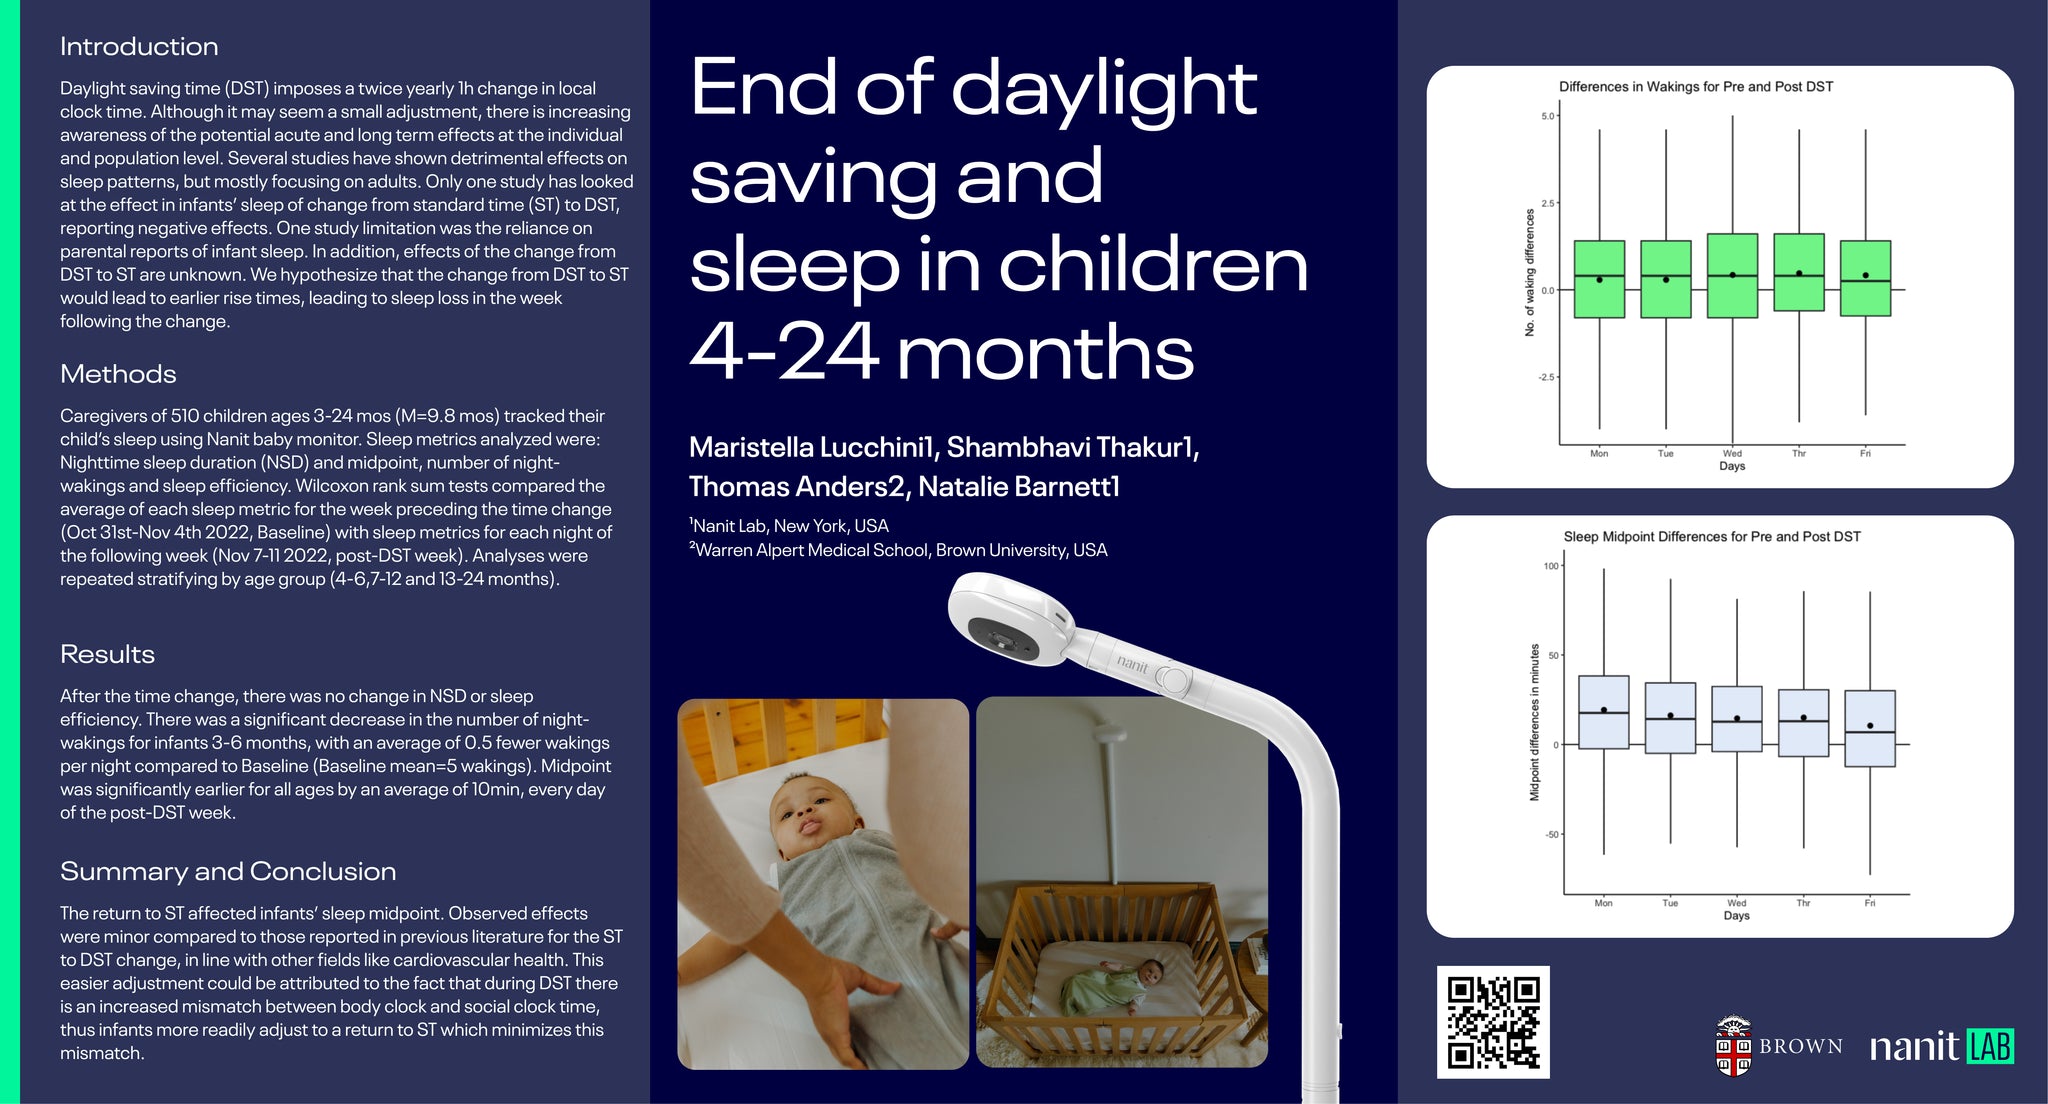 End of daylight saving and sleep children 4-24 months